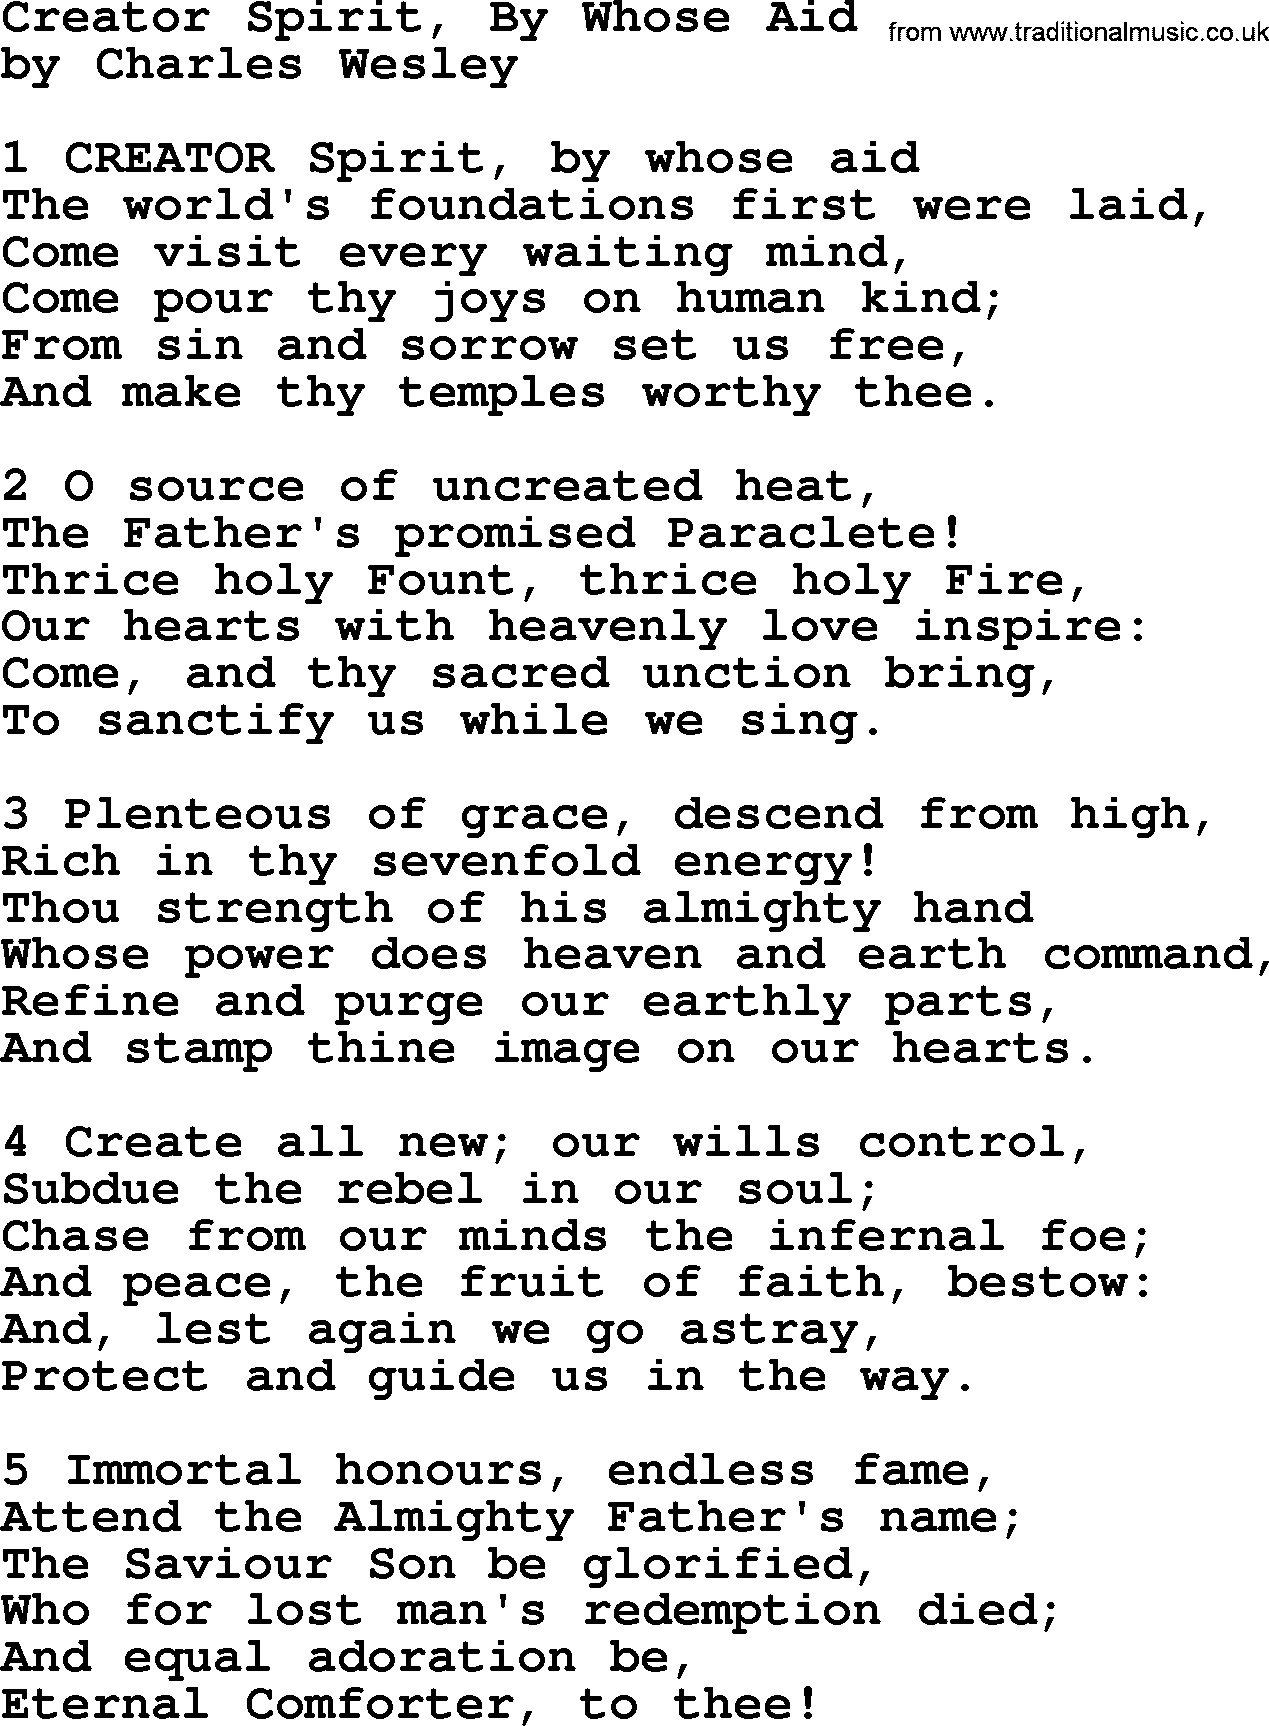 Charles Wesley hymn: Creator Spirit, By Whose Aid, lyrics